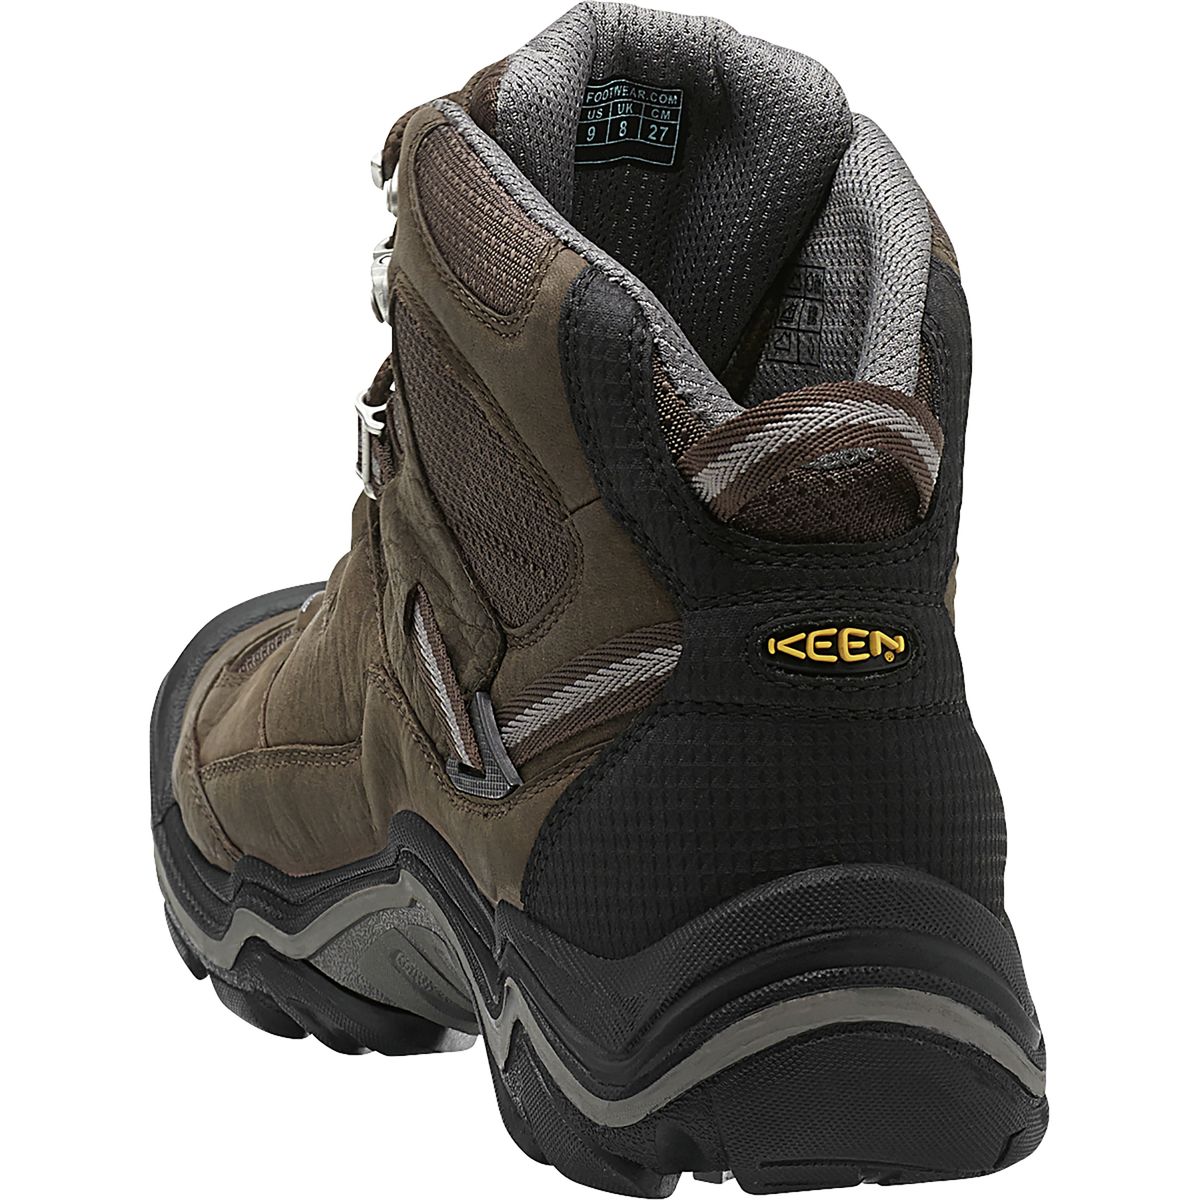 KEEN Durand Mid Waterproof Hiking Boot - Men's | Backcountry.com